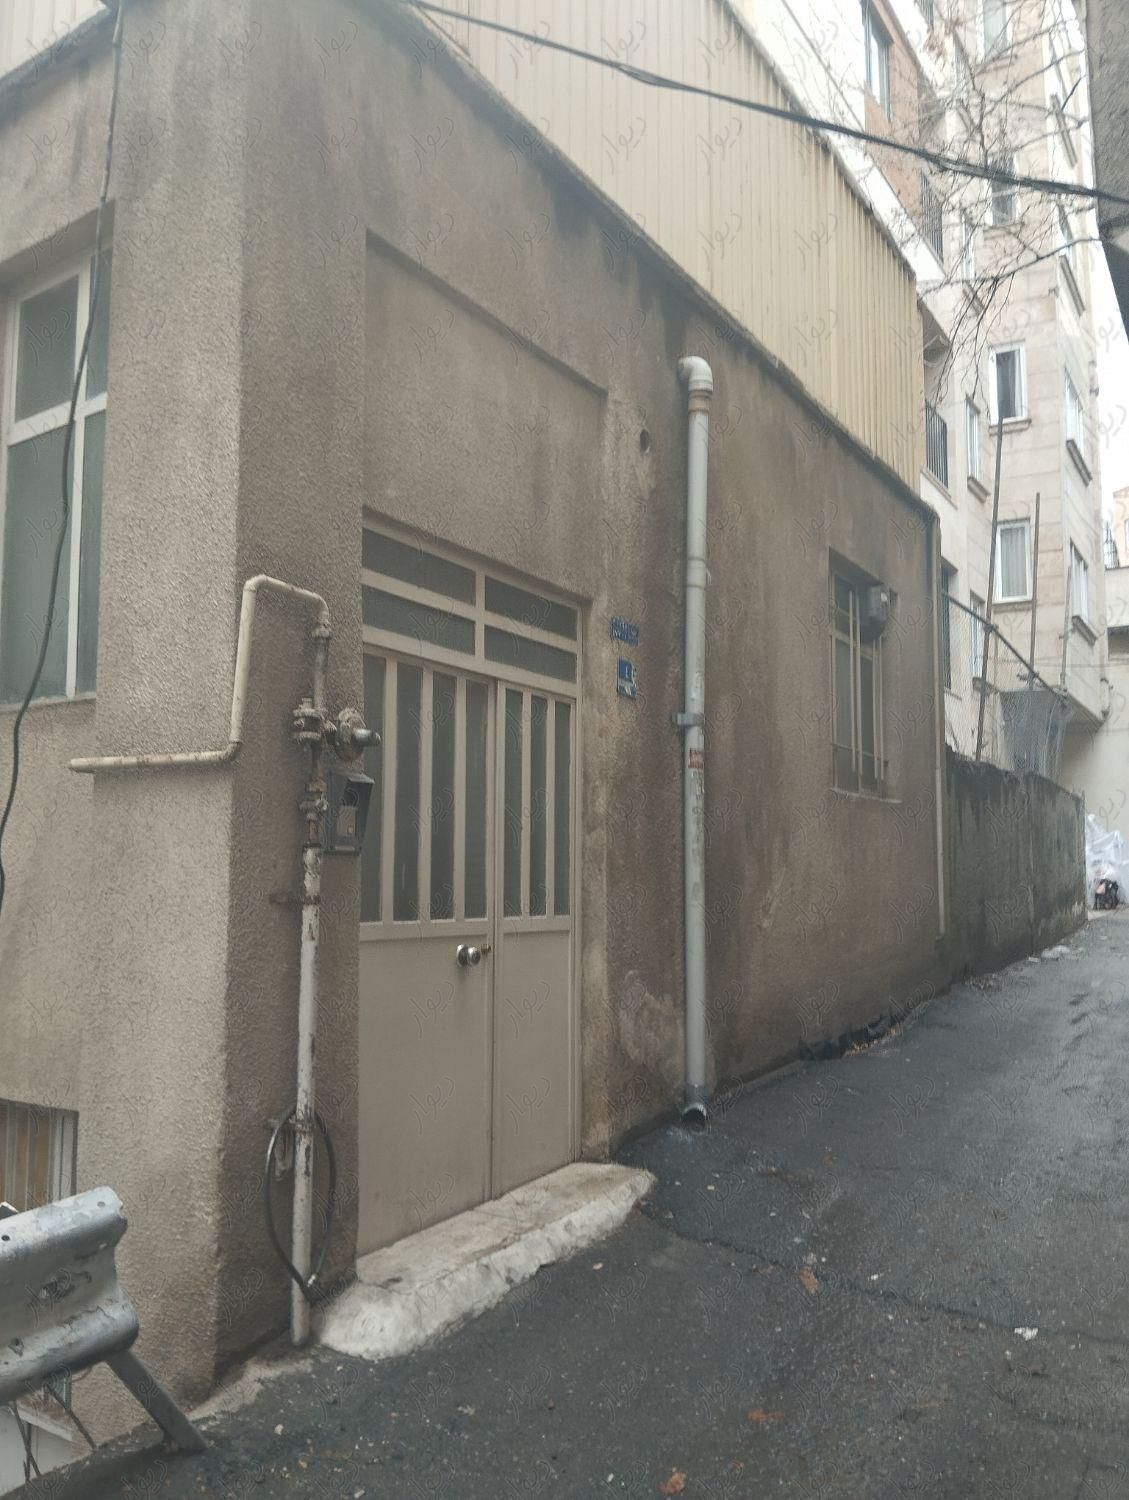 خانه کلنگی 85 در کاشانک منطقه یک|فروش زمین و کلنگی|تهران, کاشانک|دیوار